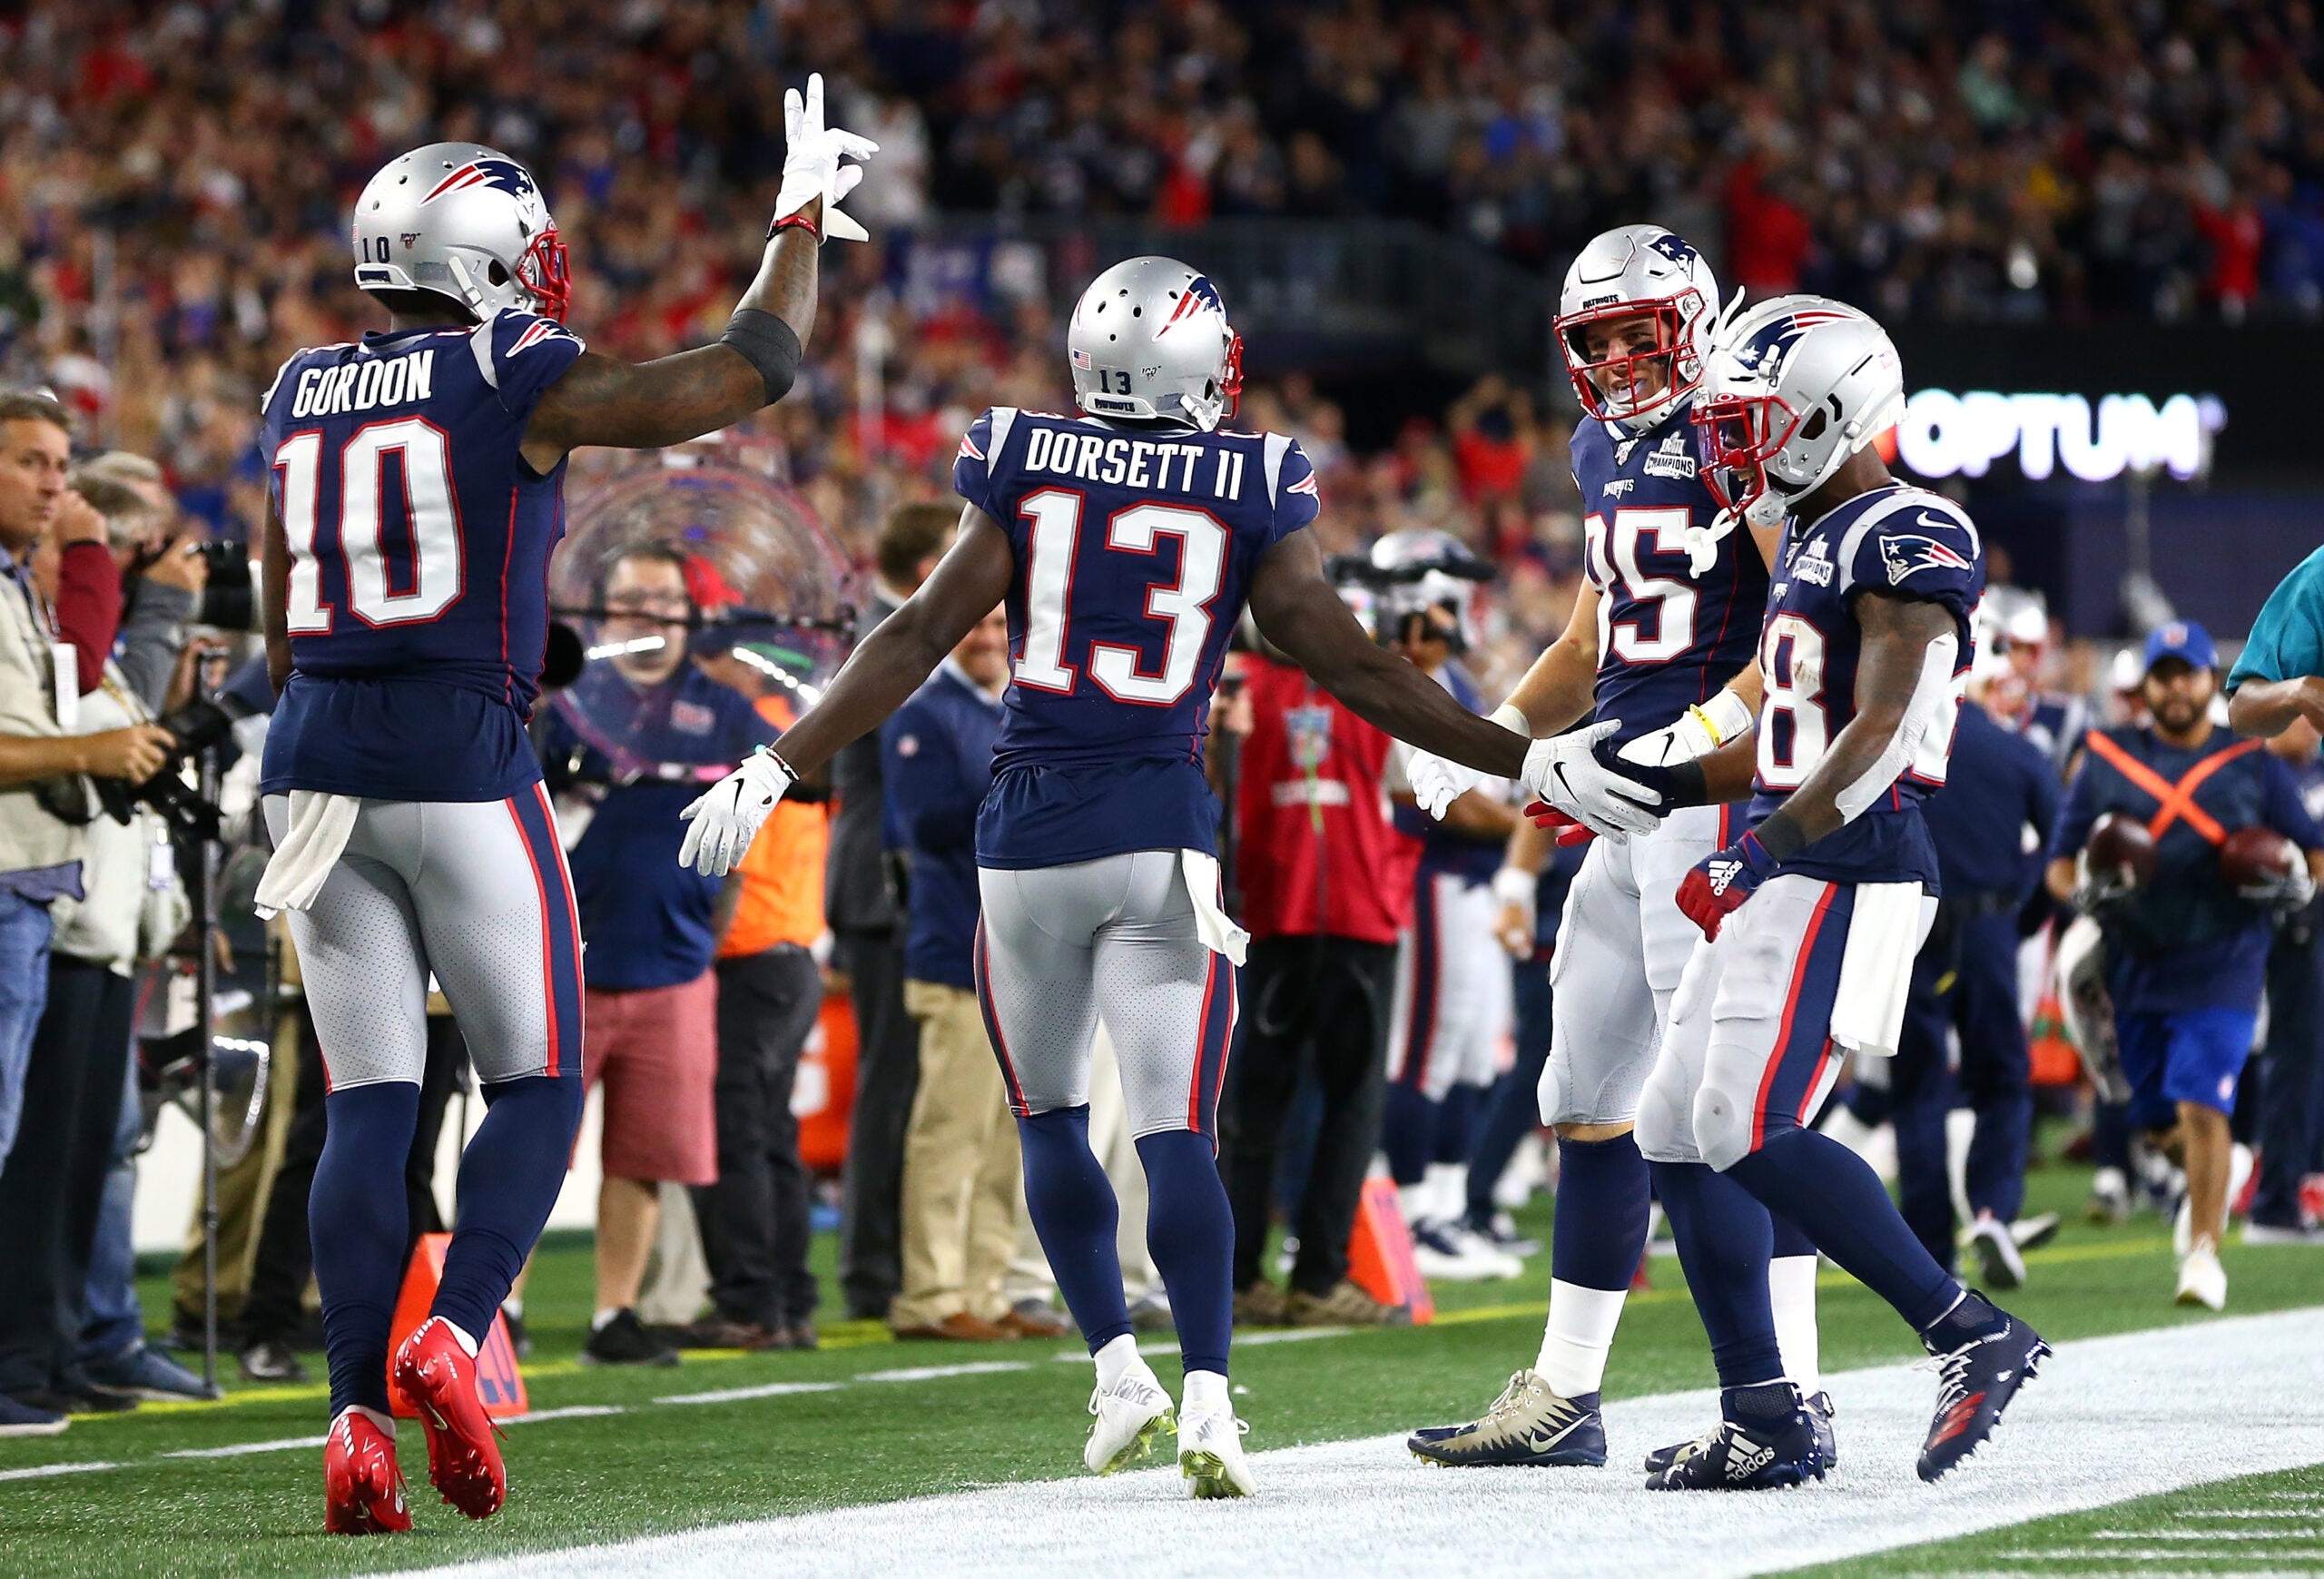 Patriots set to raise Super Bowl banner tonight - The Boston Globe